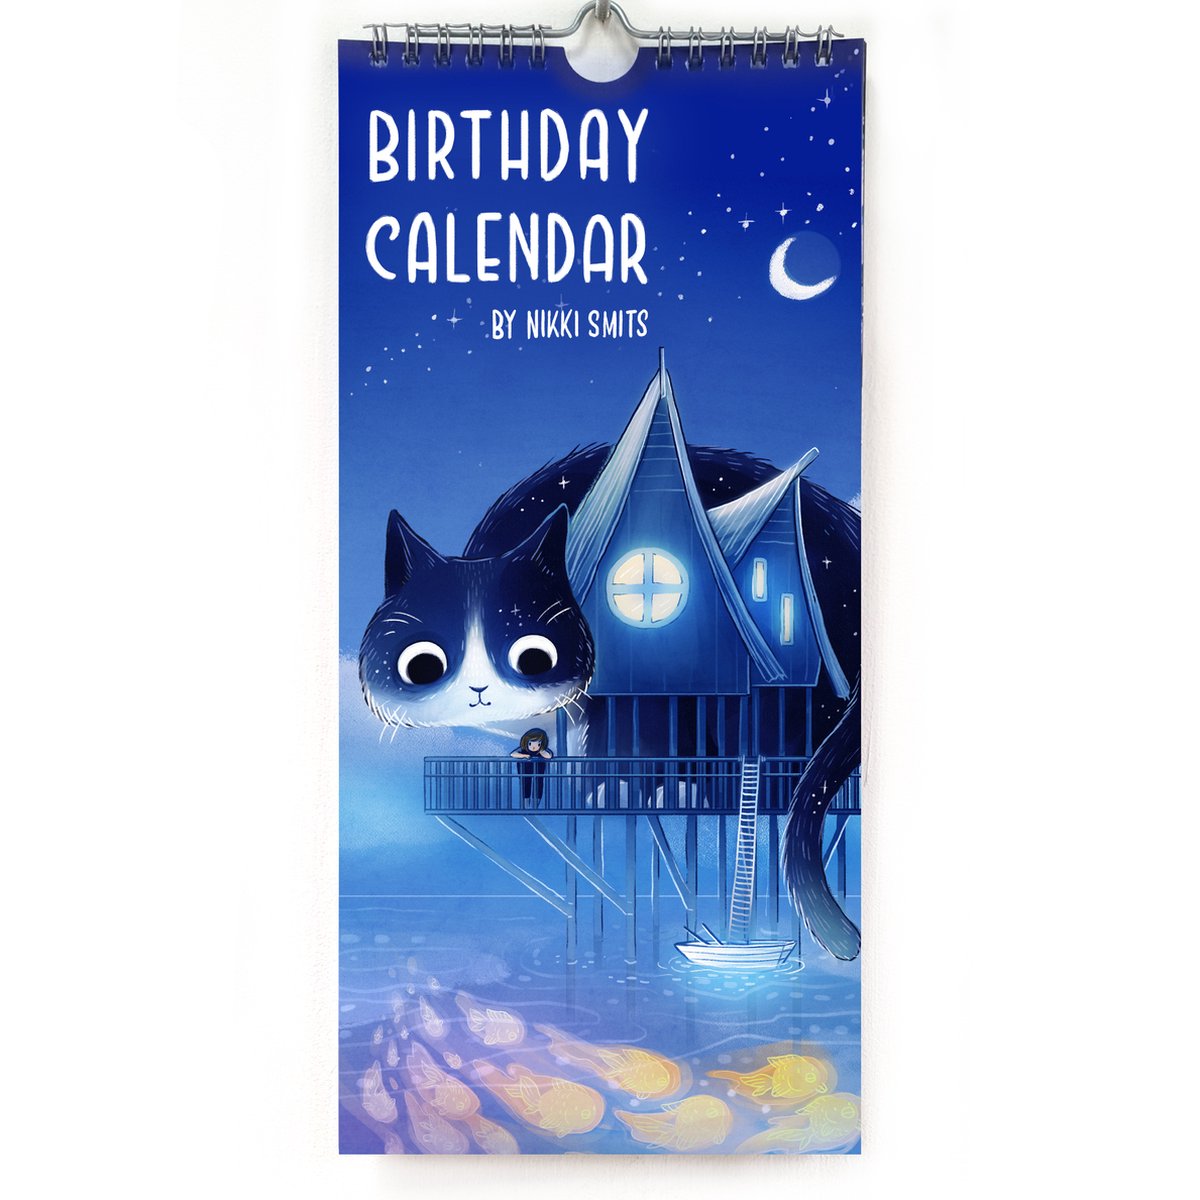 Verjaardagskalender met illustraties van Nikki Smits | Fantasie kunst kalender